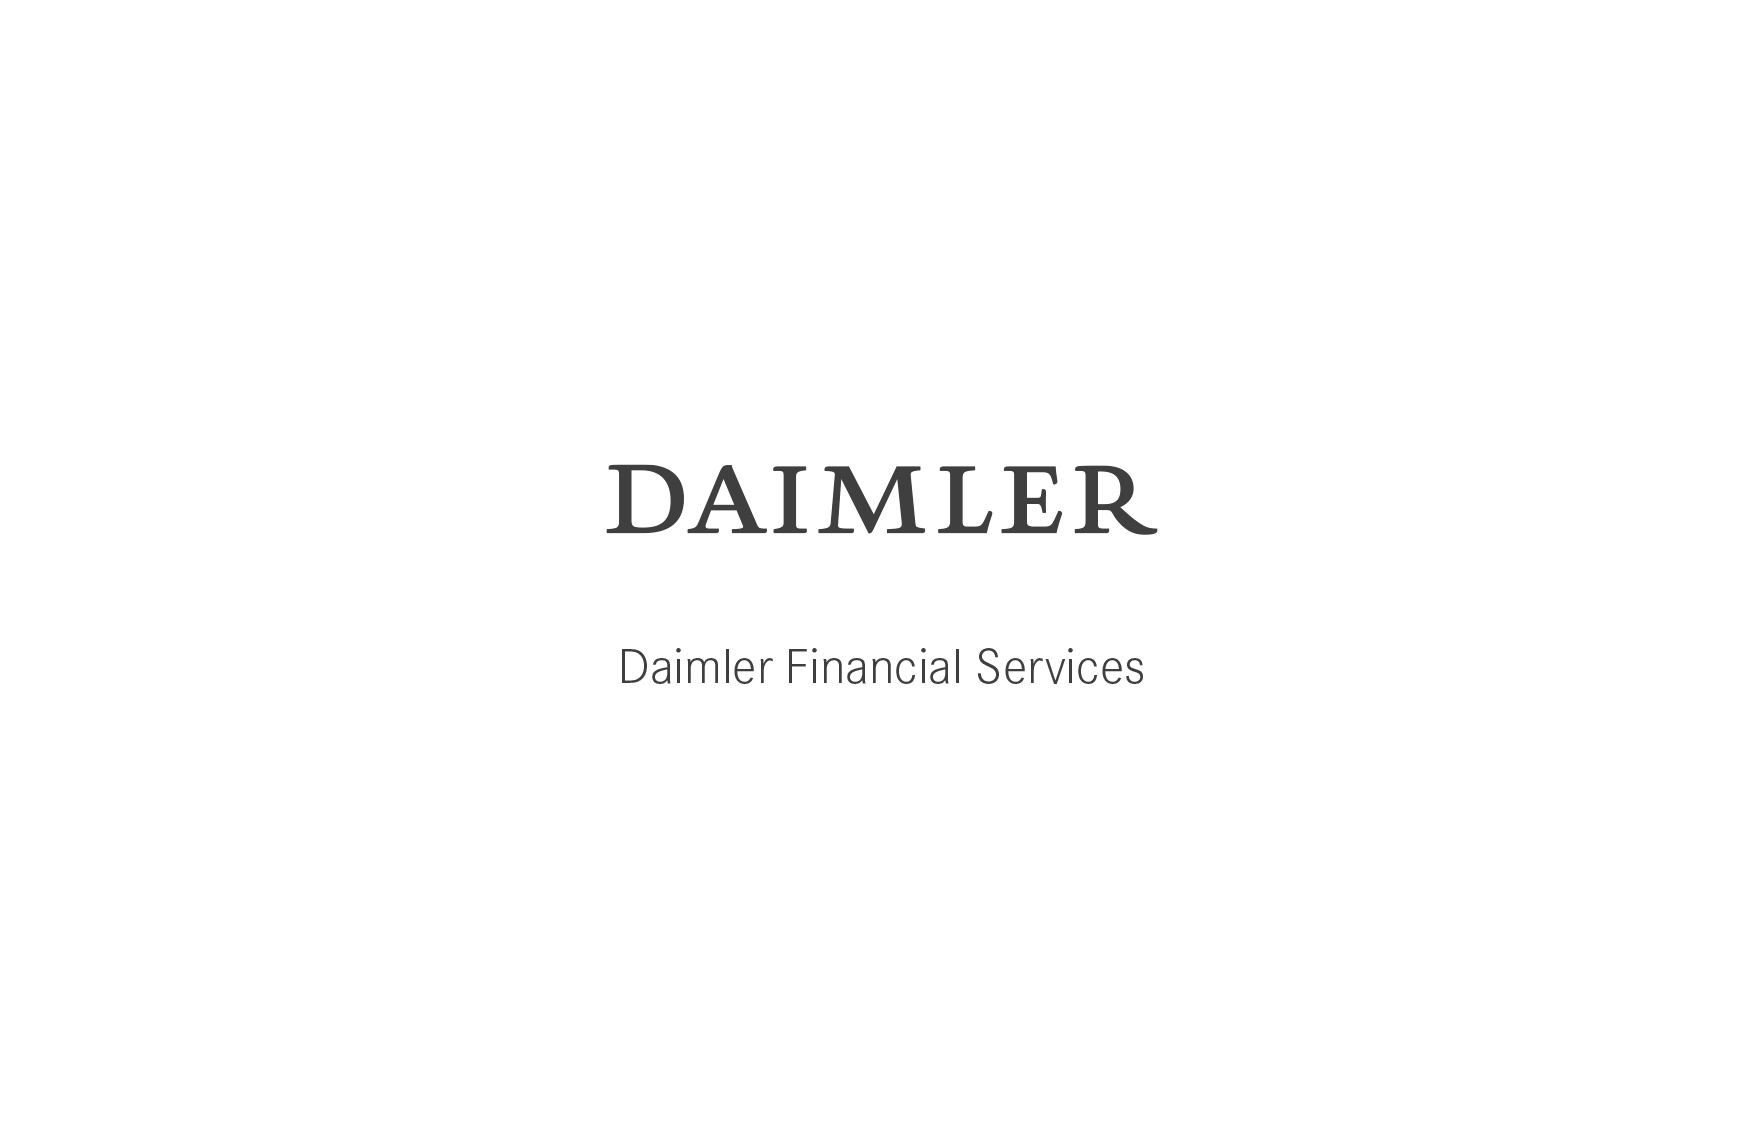 World Partner Forum 2006. Daimler Financial Services